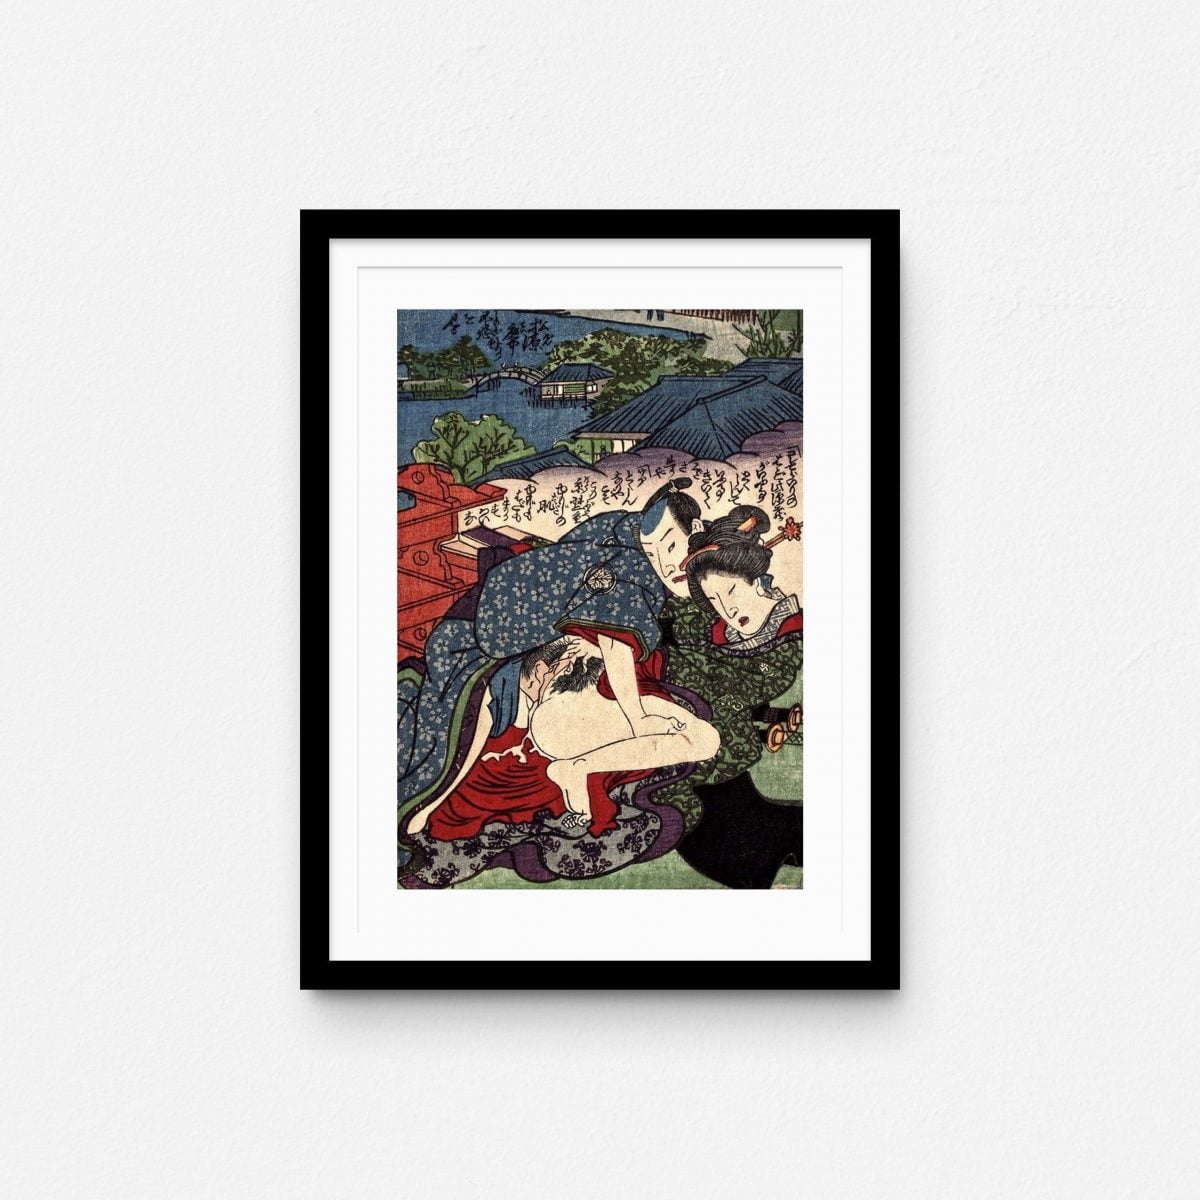 bliss-on-a-roof-shunga-japanese-erotica-prints-frame